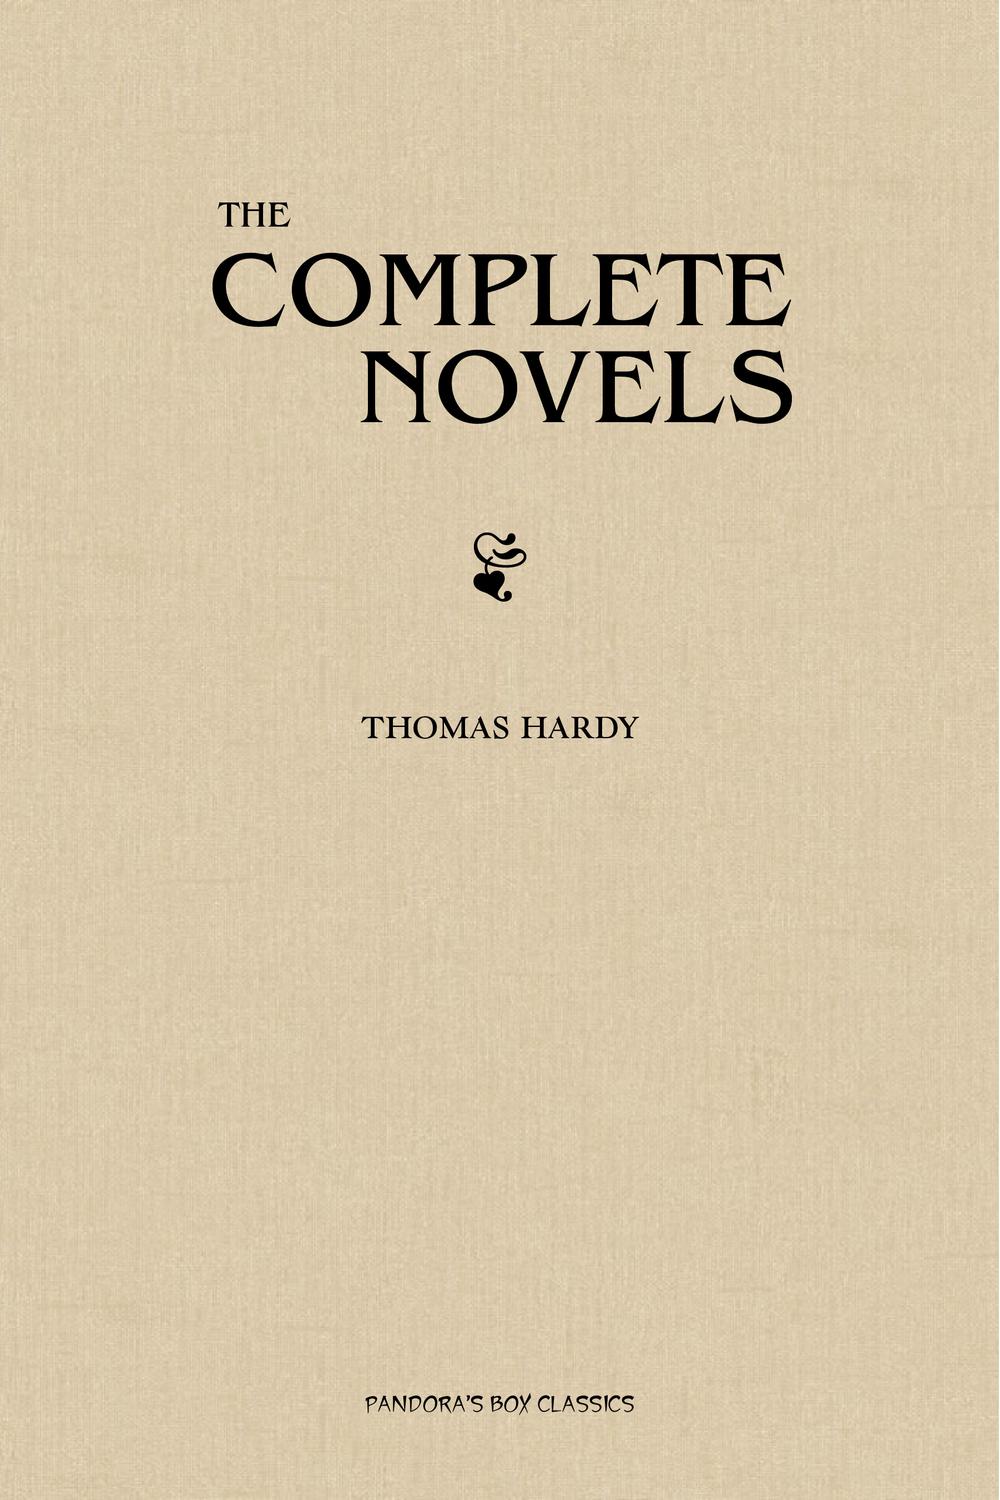 The Complete Novels of Thomas Hardy - Thomas Hardy